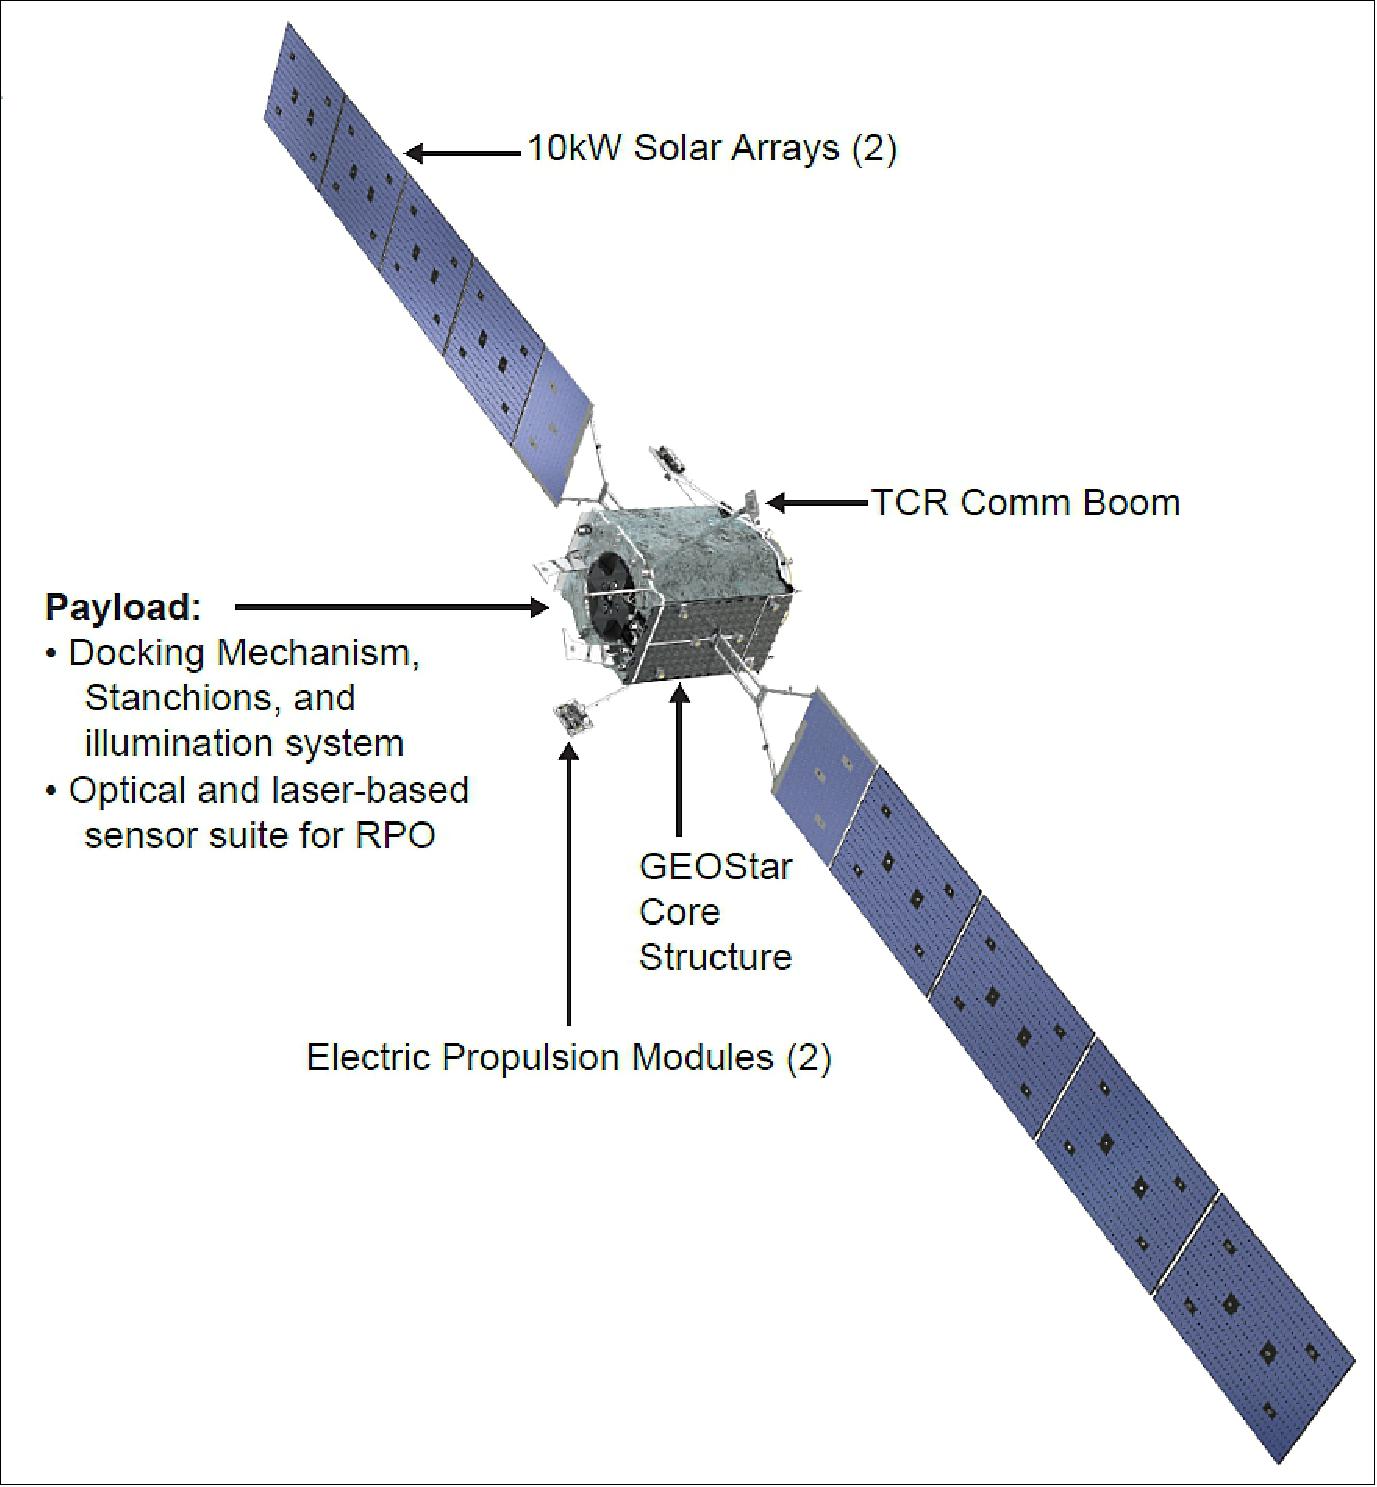 Figure 1: Illustration of the MEV-1 spacecraft (image credit: Orbital ATK)